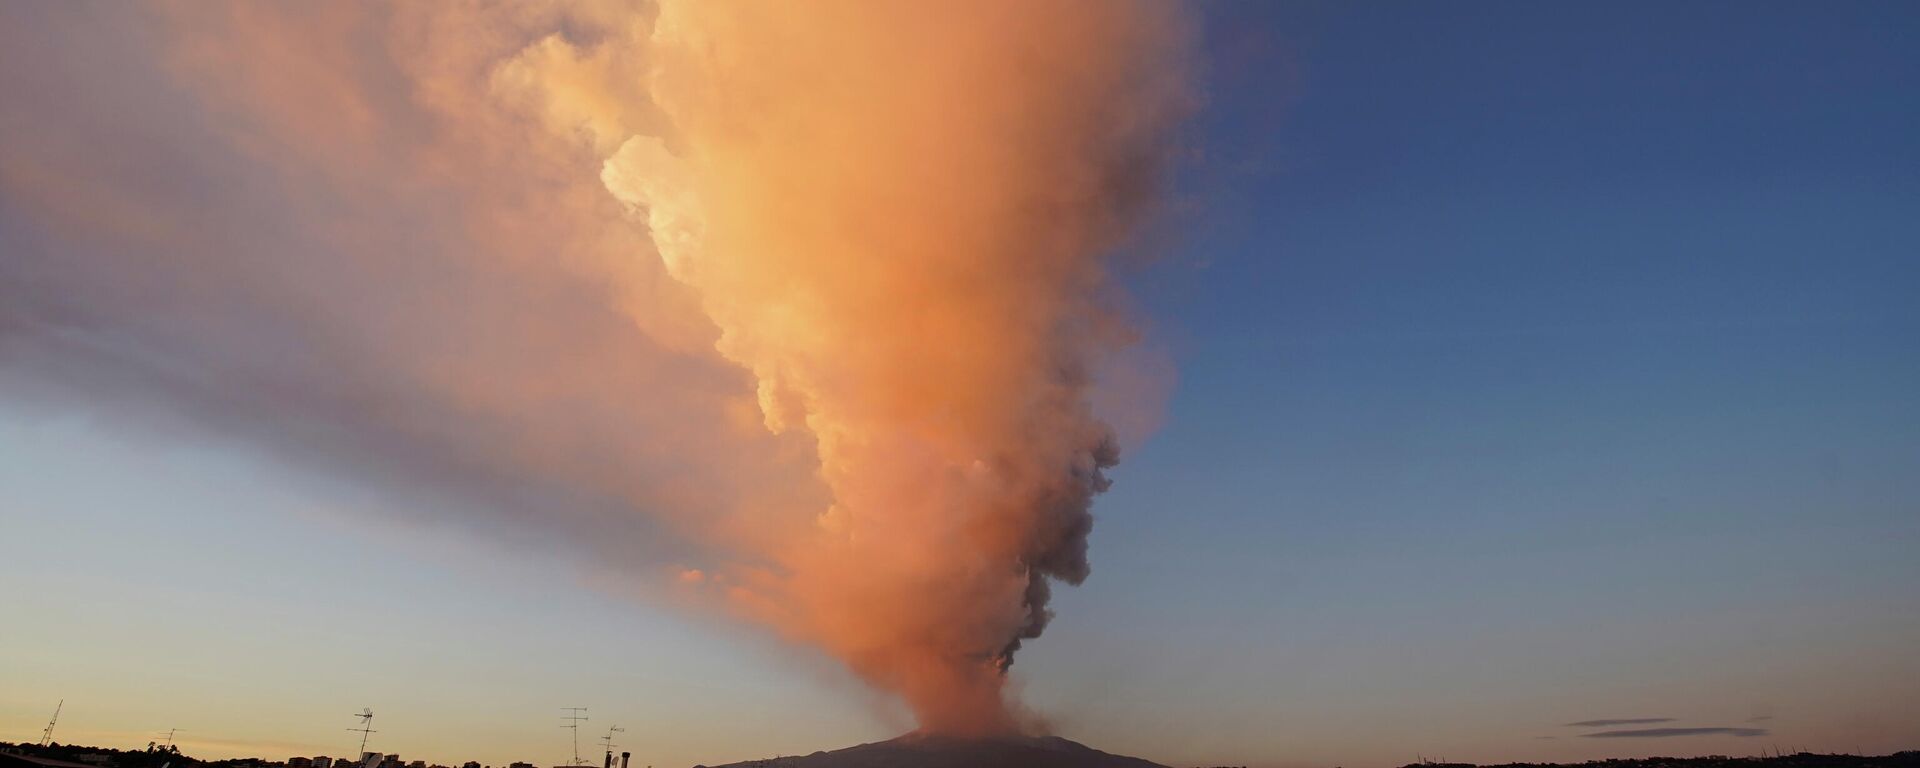 Monte Etna en erupción - Sputnik Mundo, 1920, 28.02.2021